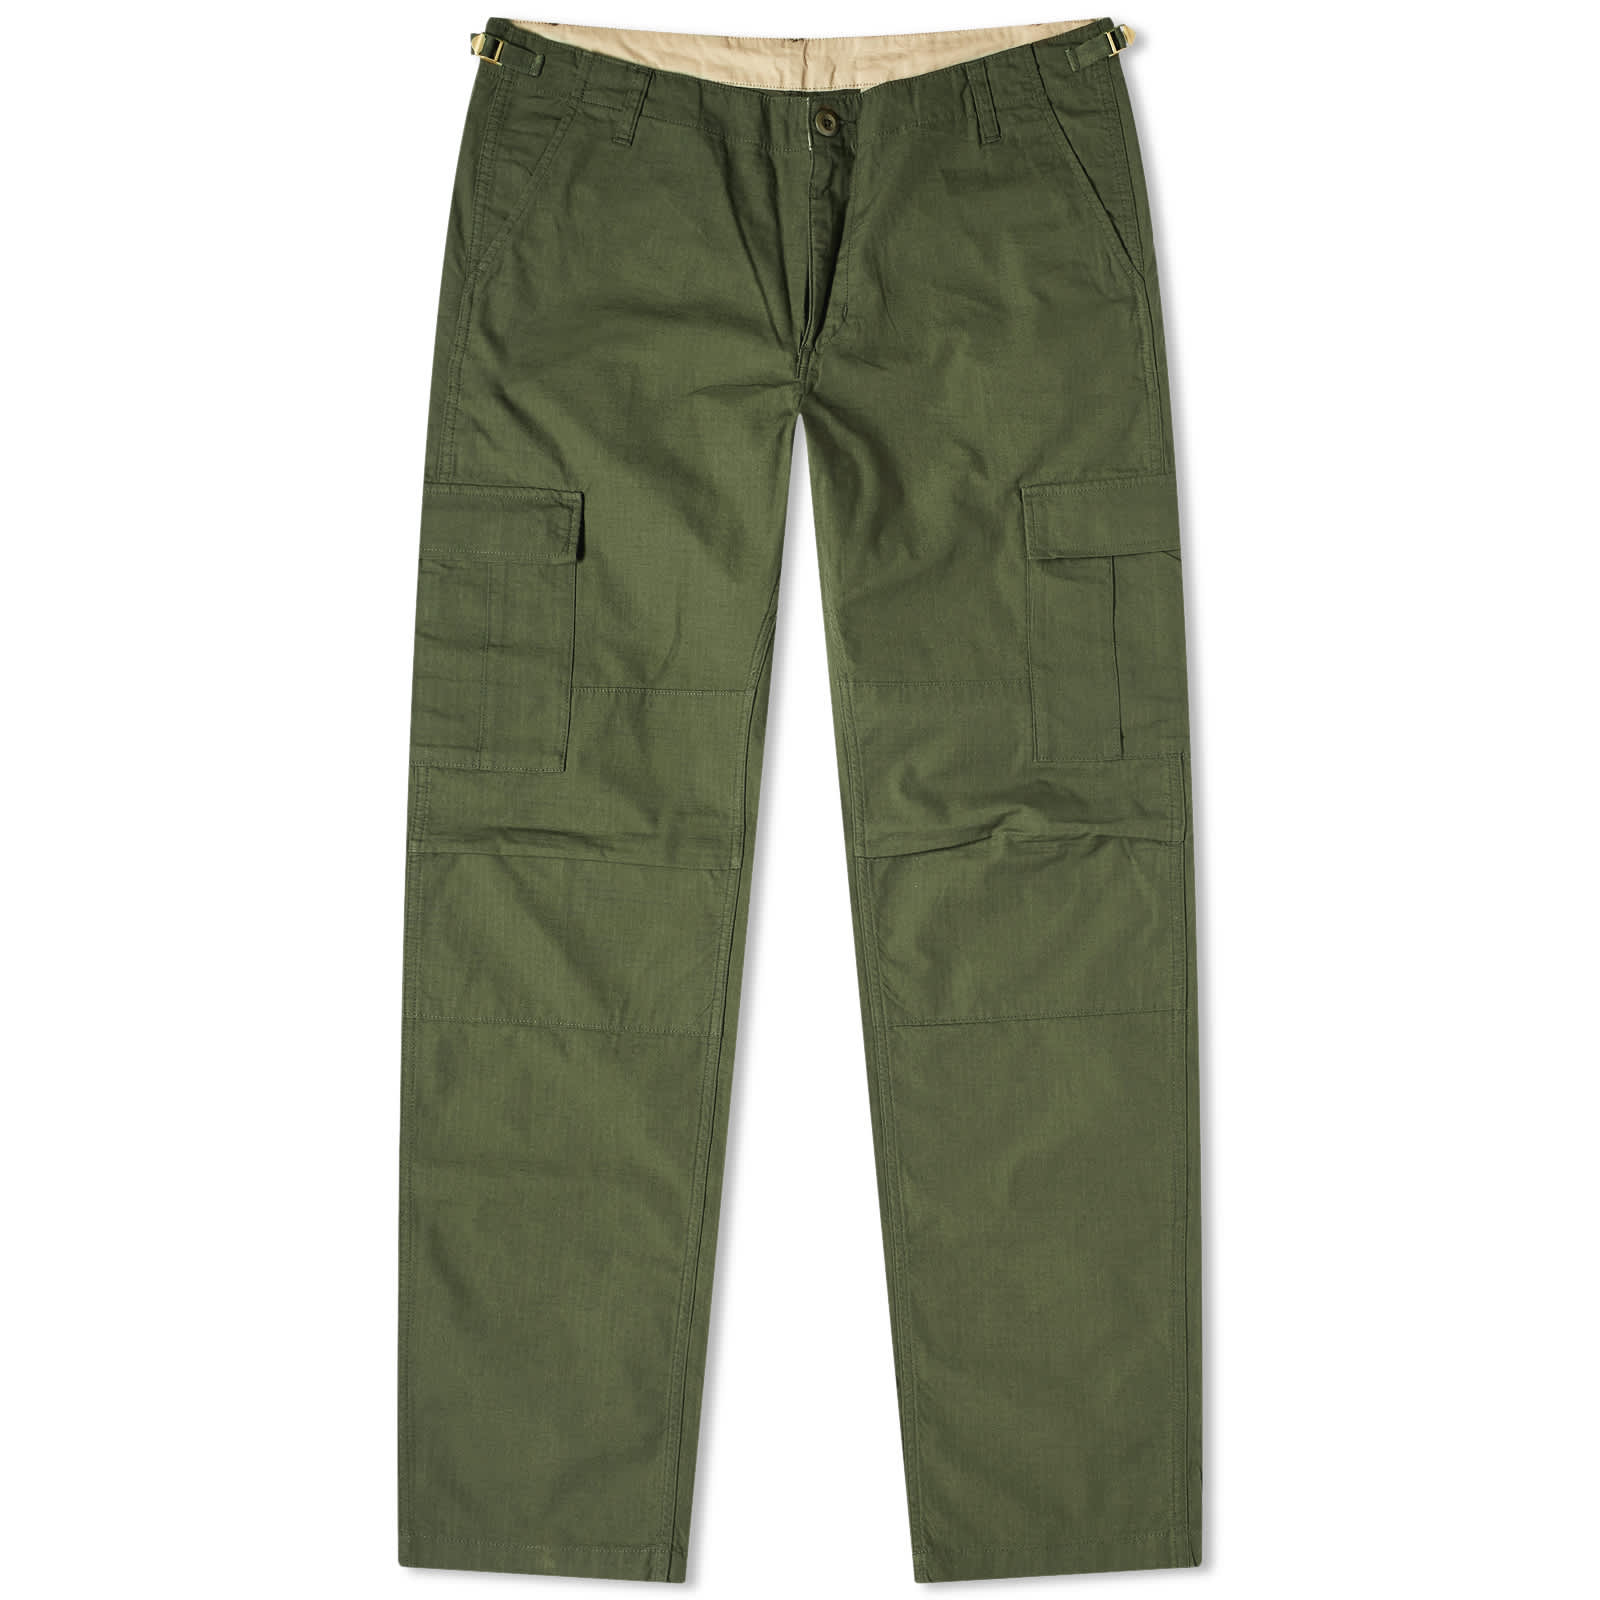 Брюки Carhartt Wip Aviation, цвет Dollar Green шорты regular carhartt wip цвет dollar green garment dyed